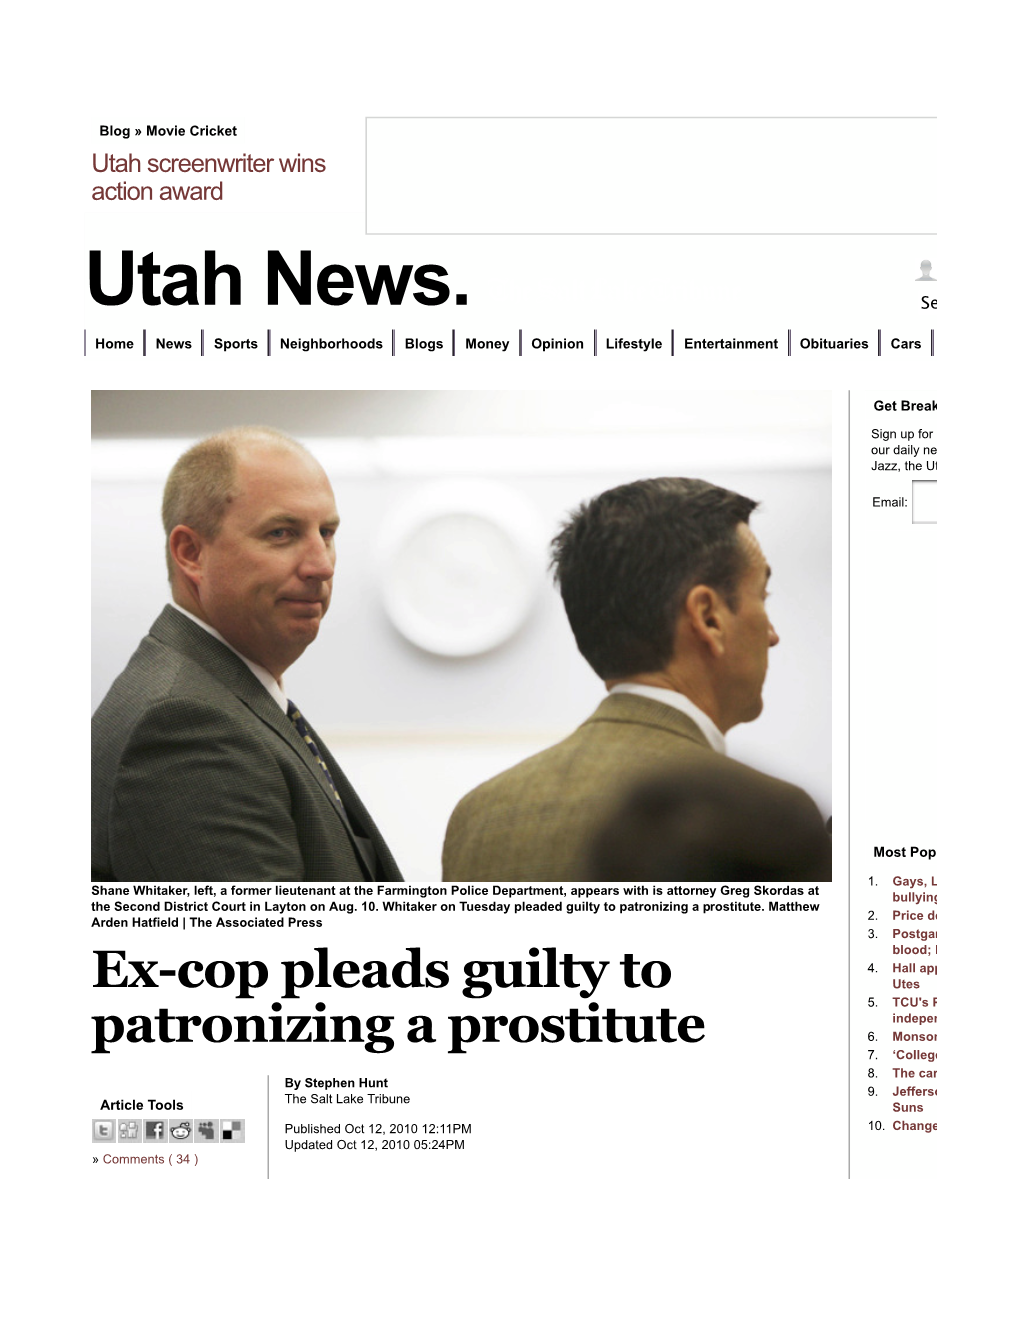 Ex-Cop Pleads Guilty to Patronizing a Prostitute | the Salt Lake Tribune.Pdf